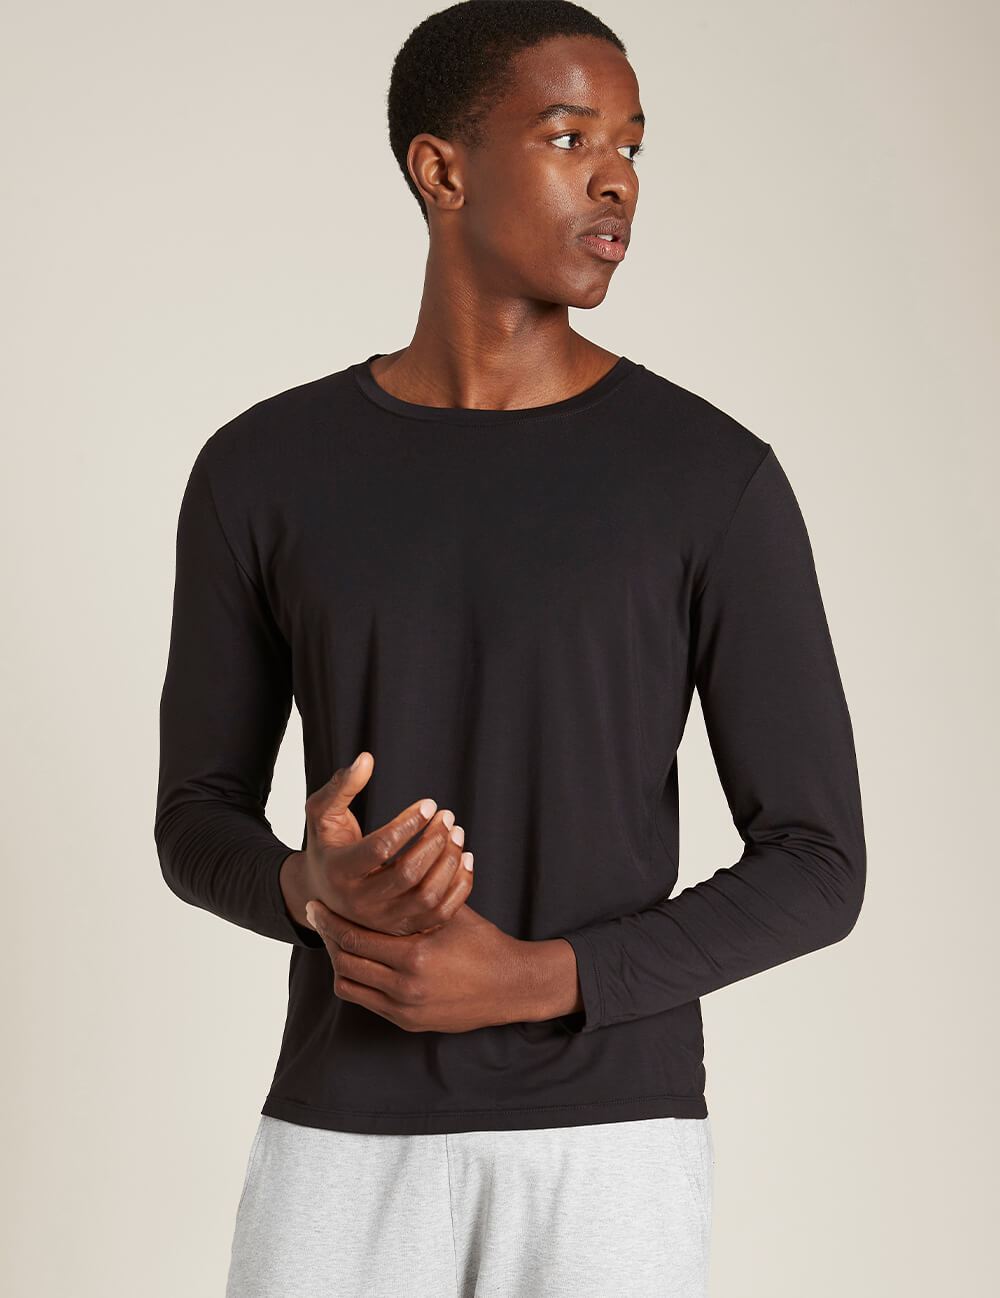 Men's Long Sleeve T-Shirt Black